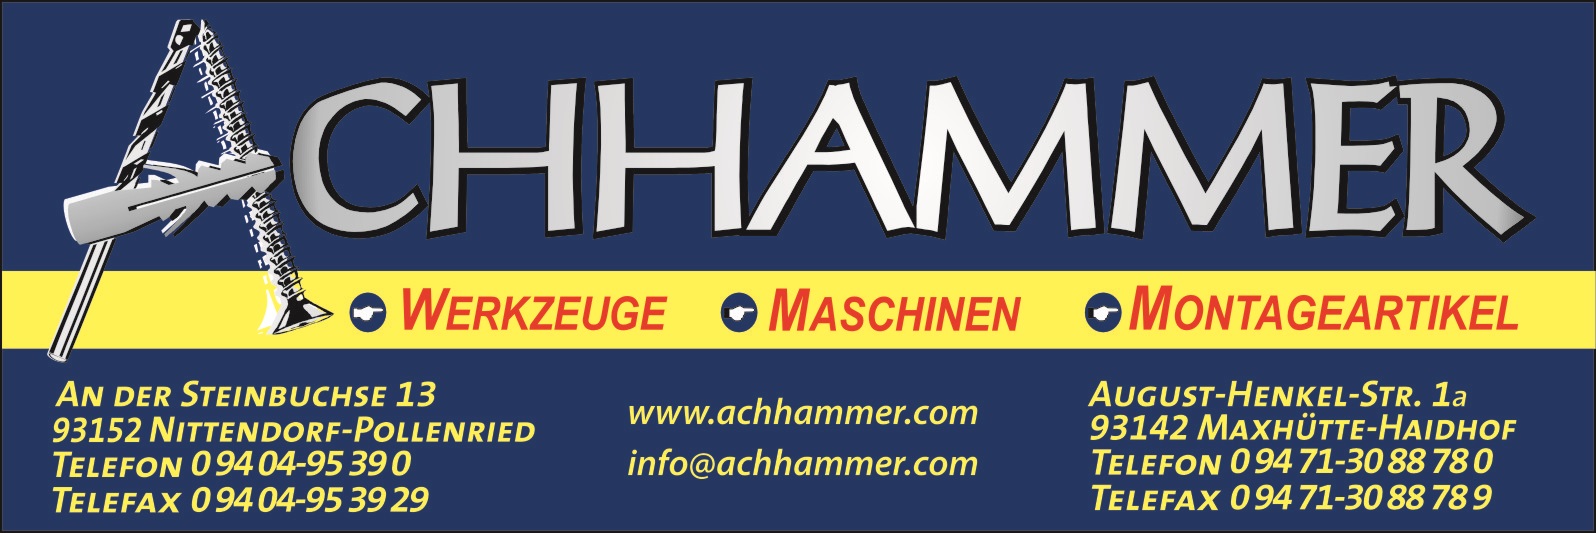 Achhammer Reparaturformular Logo